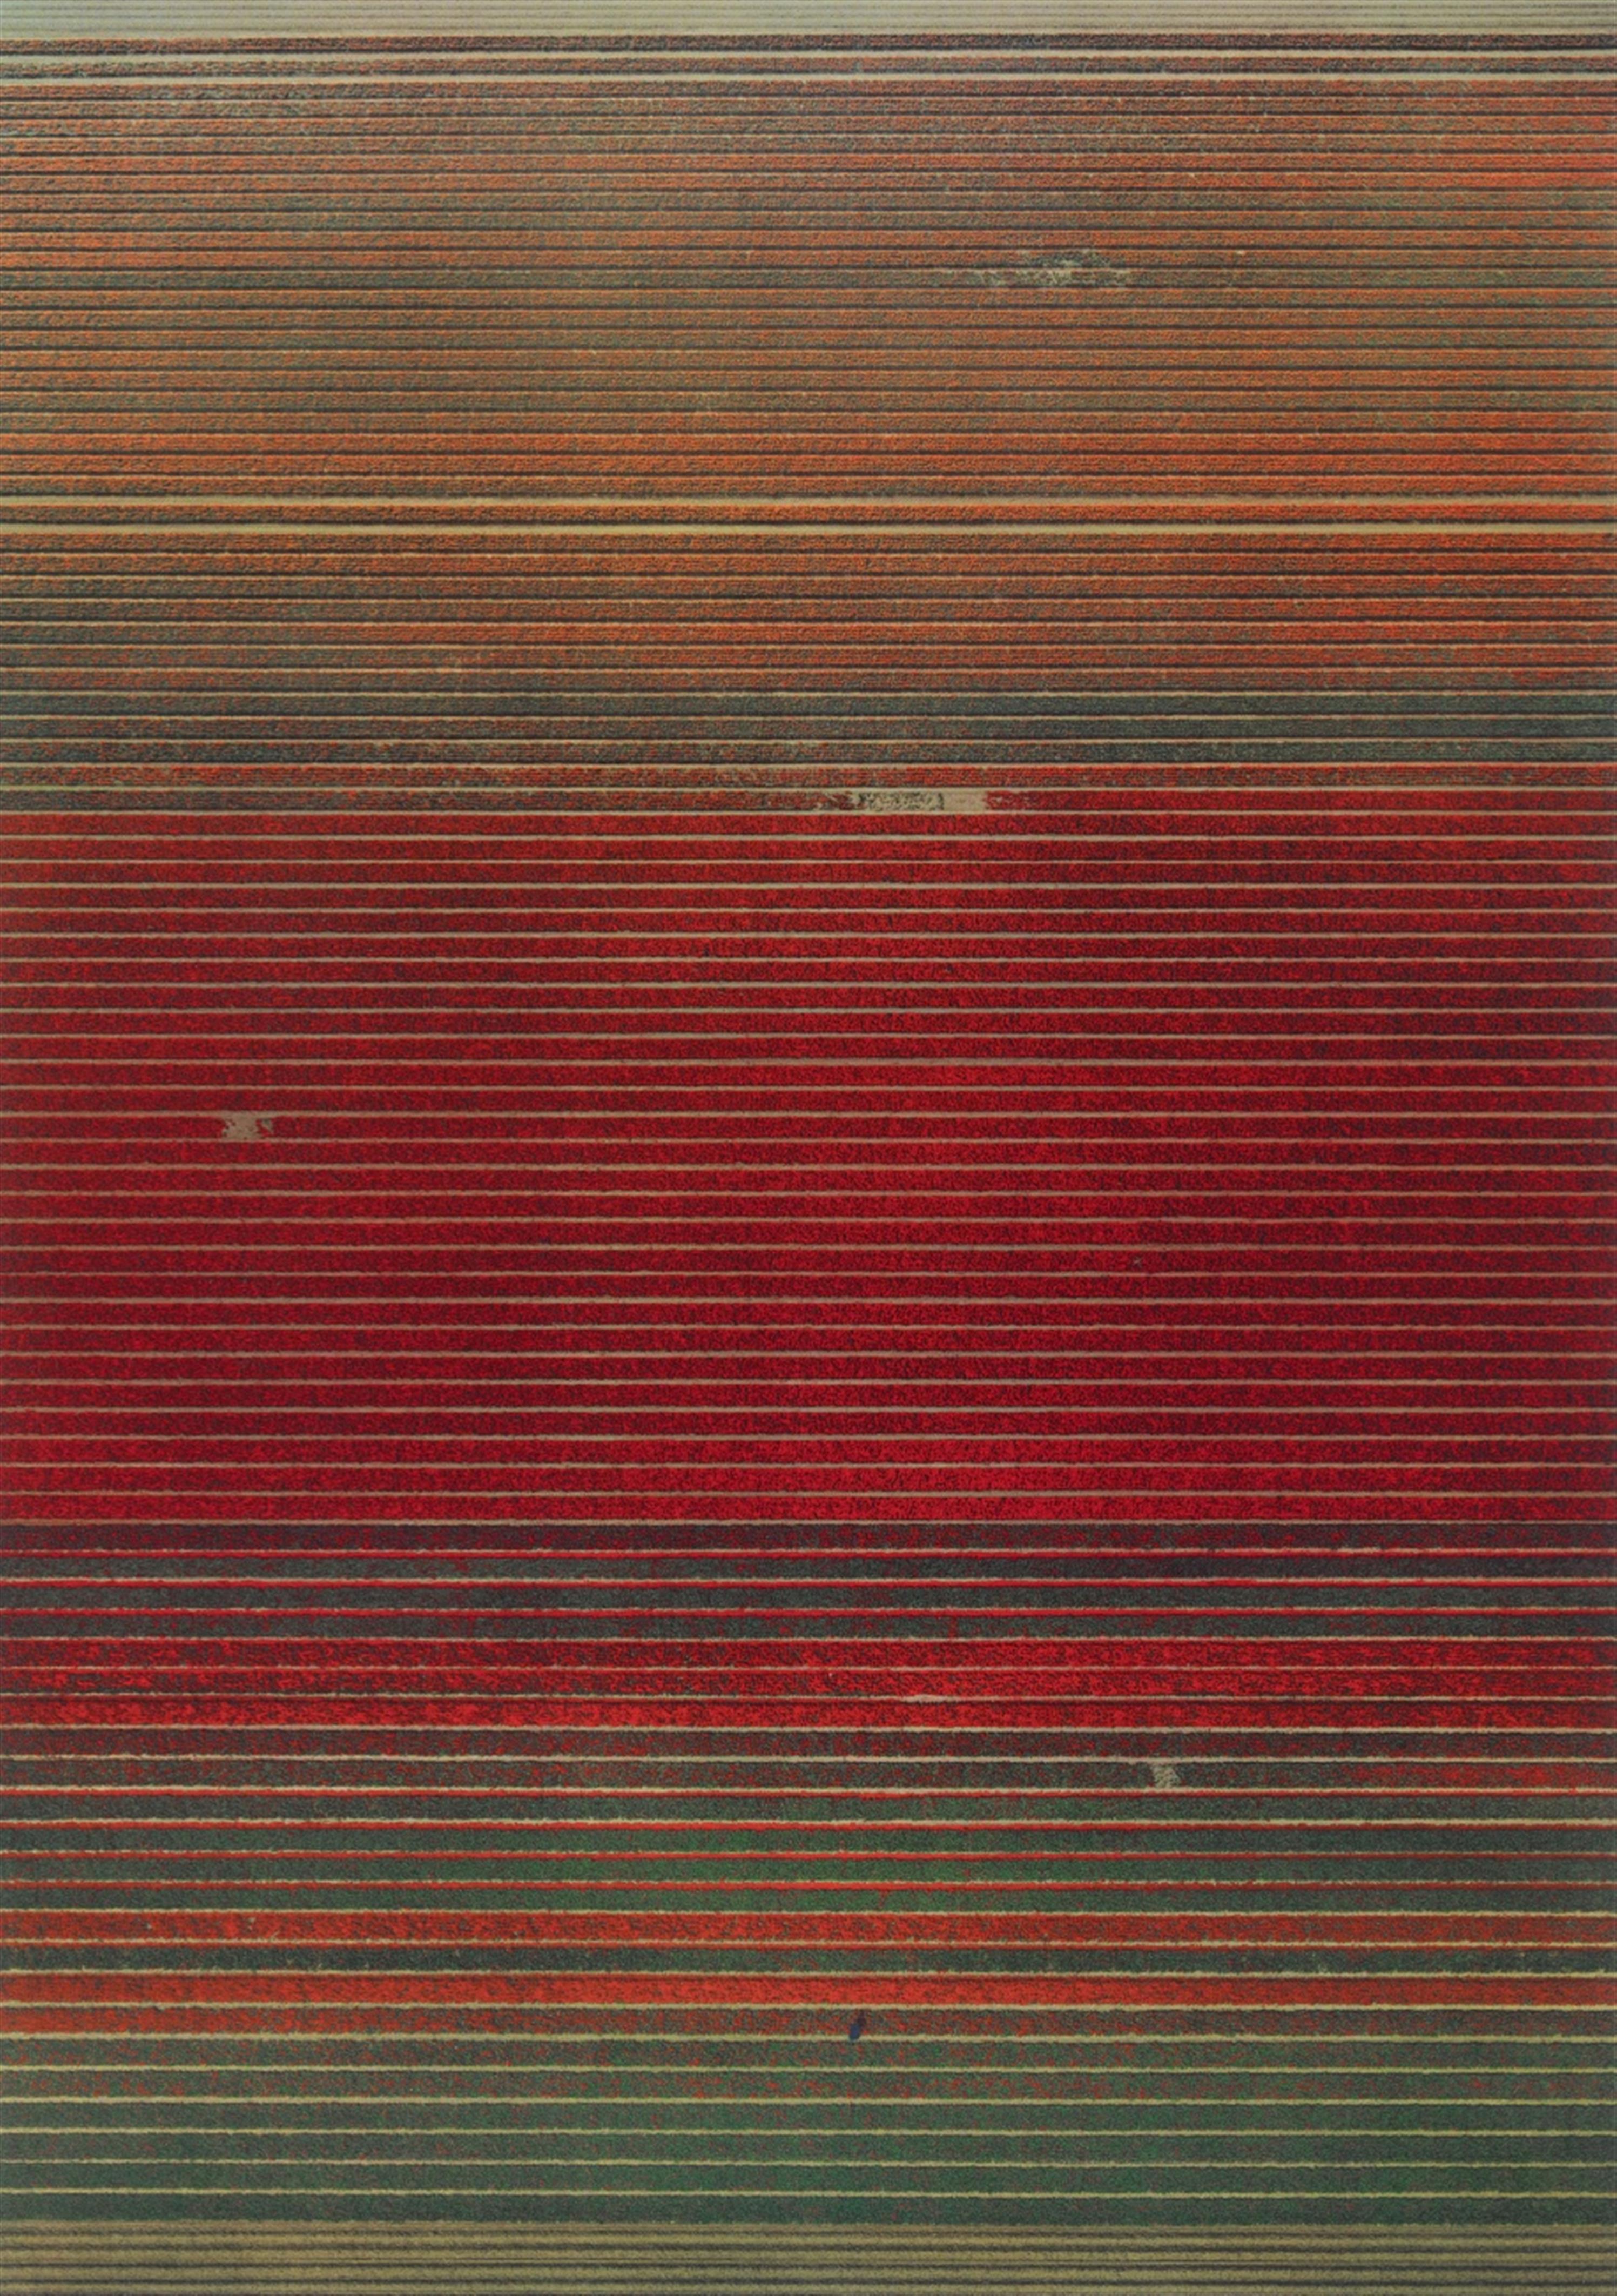 Andreas Gursky - Ohne Titel XVIII - image-1